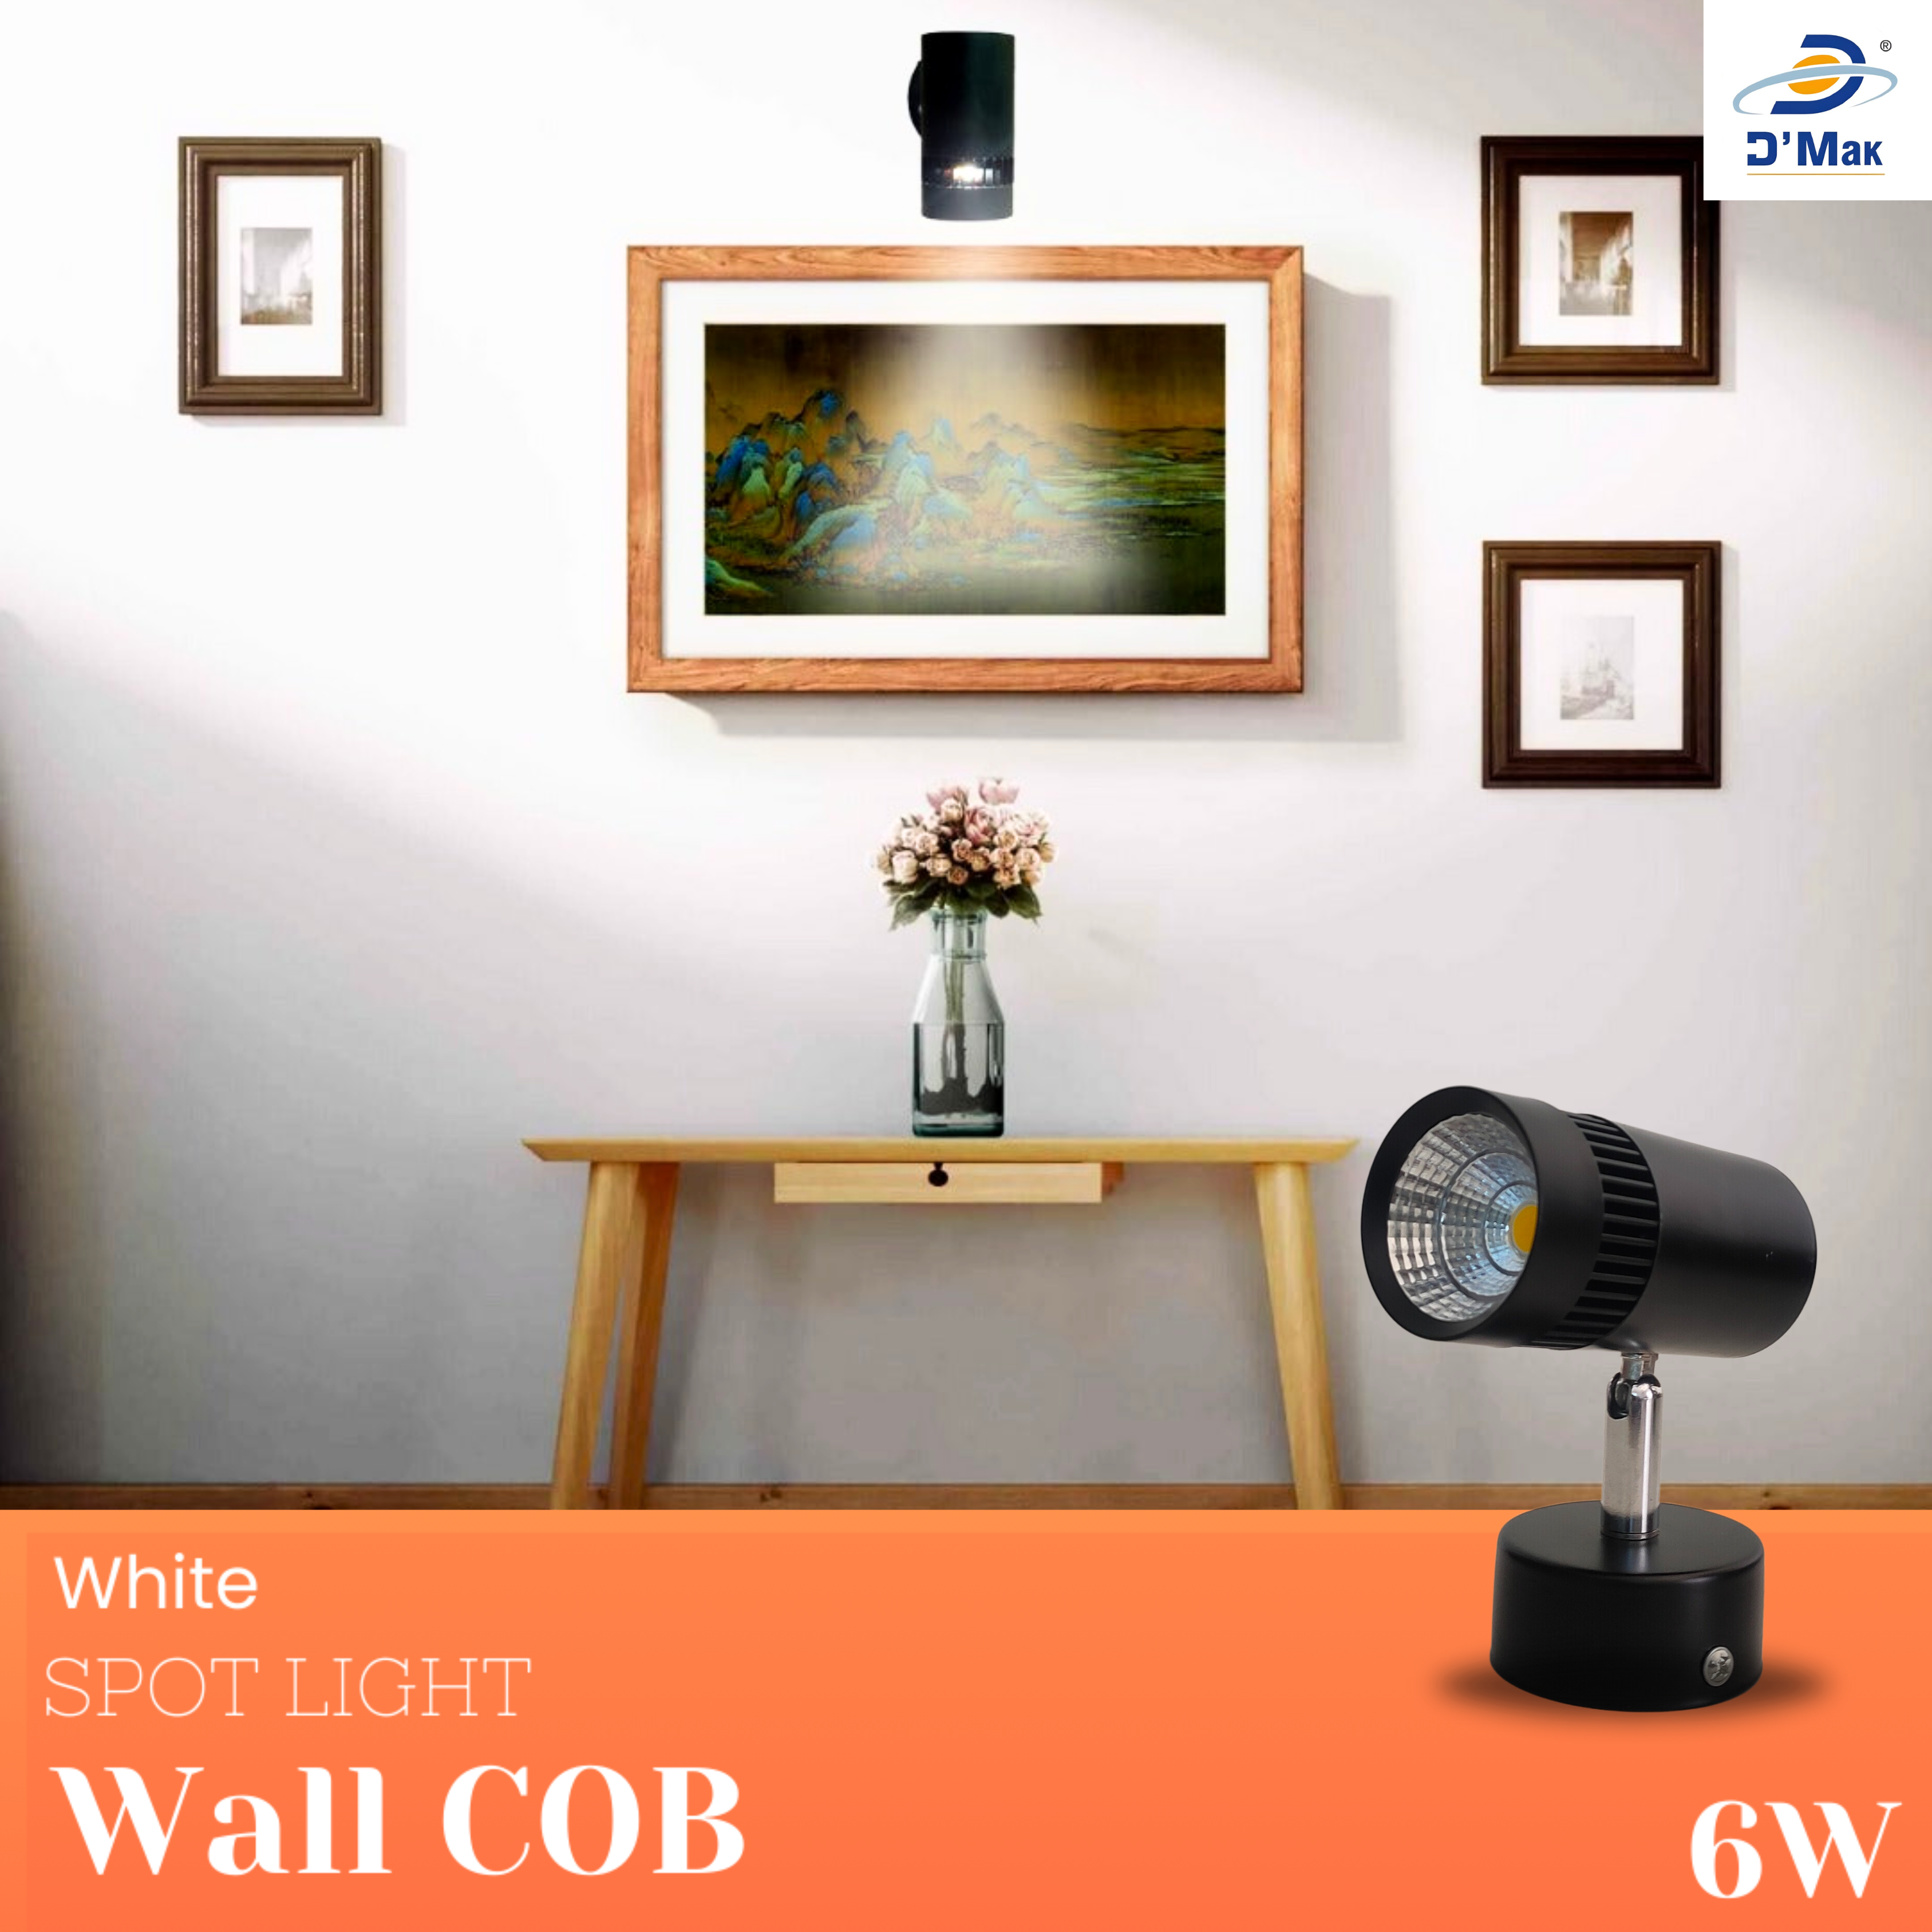 6 Watt Led Black Body Wall Light for focusing wall or photo frame